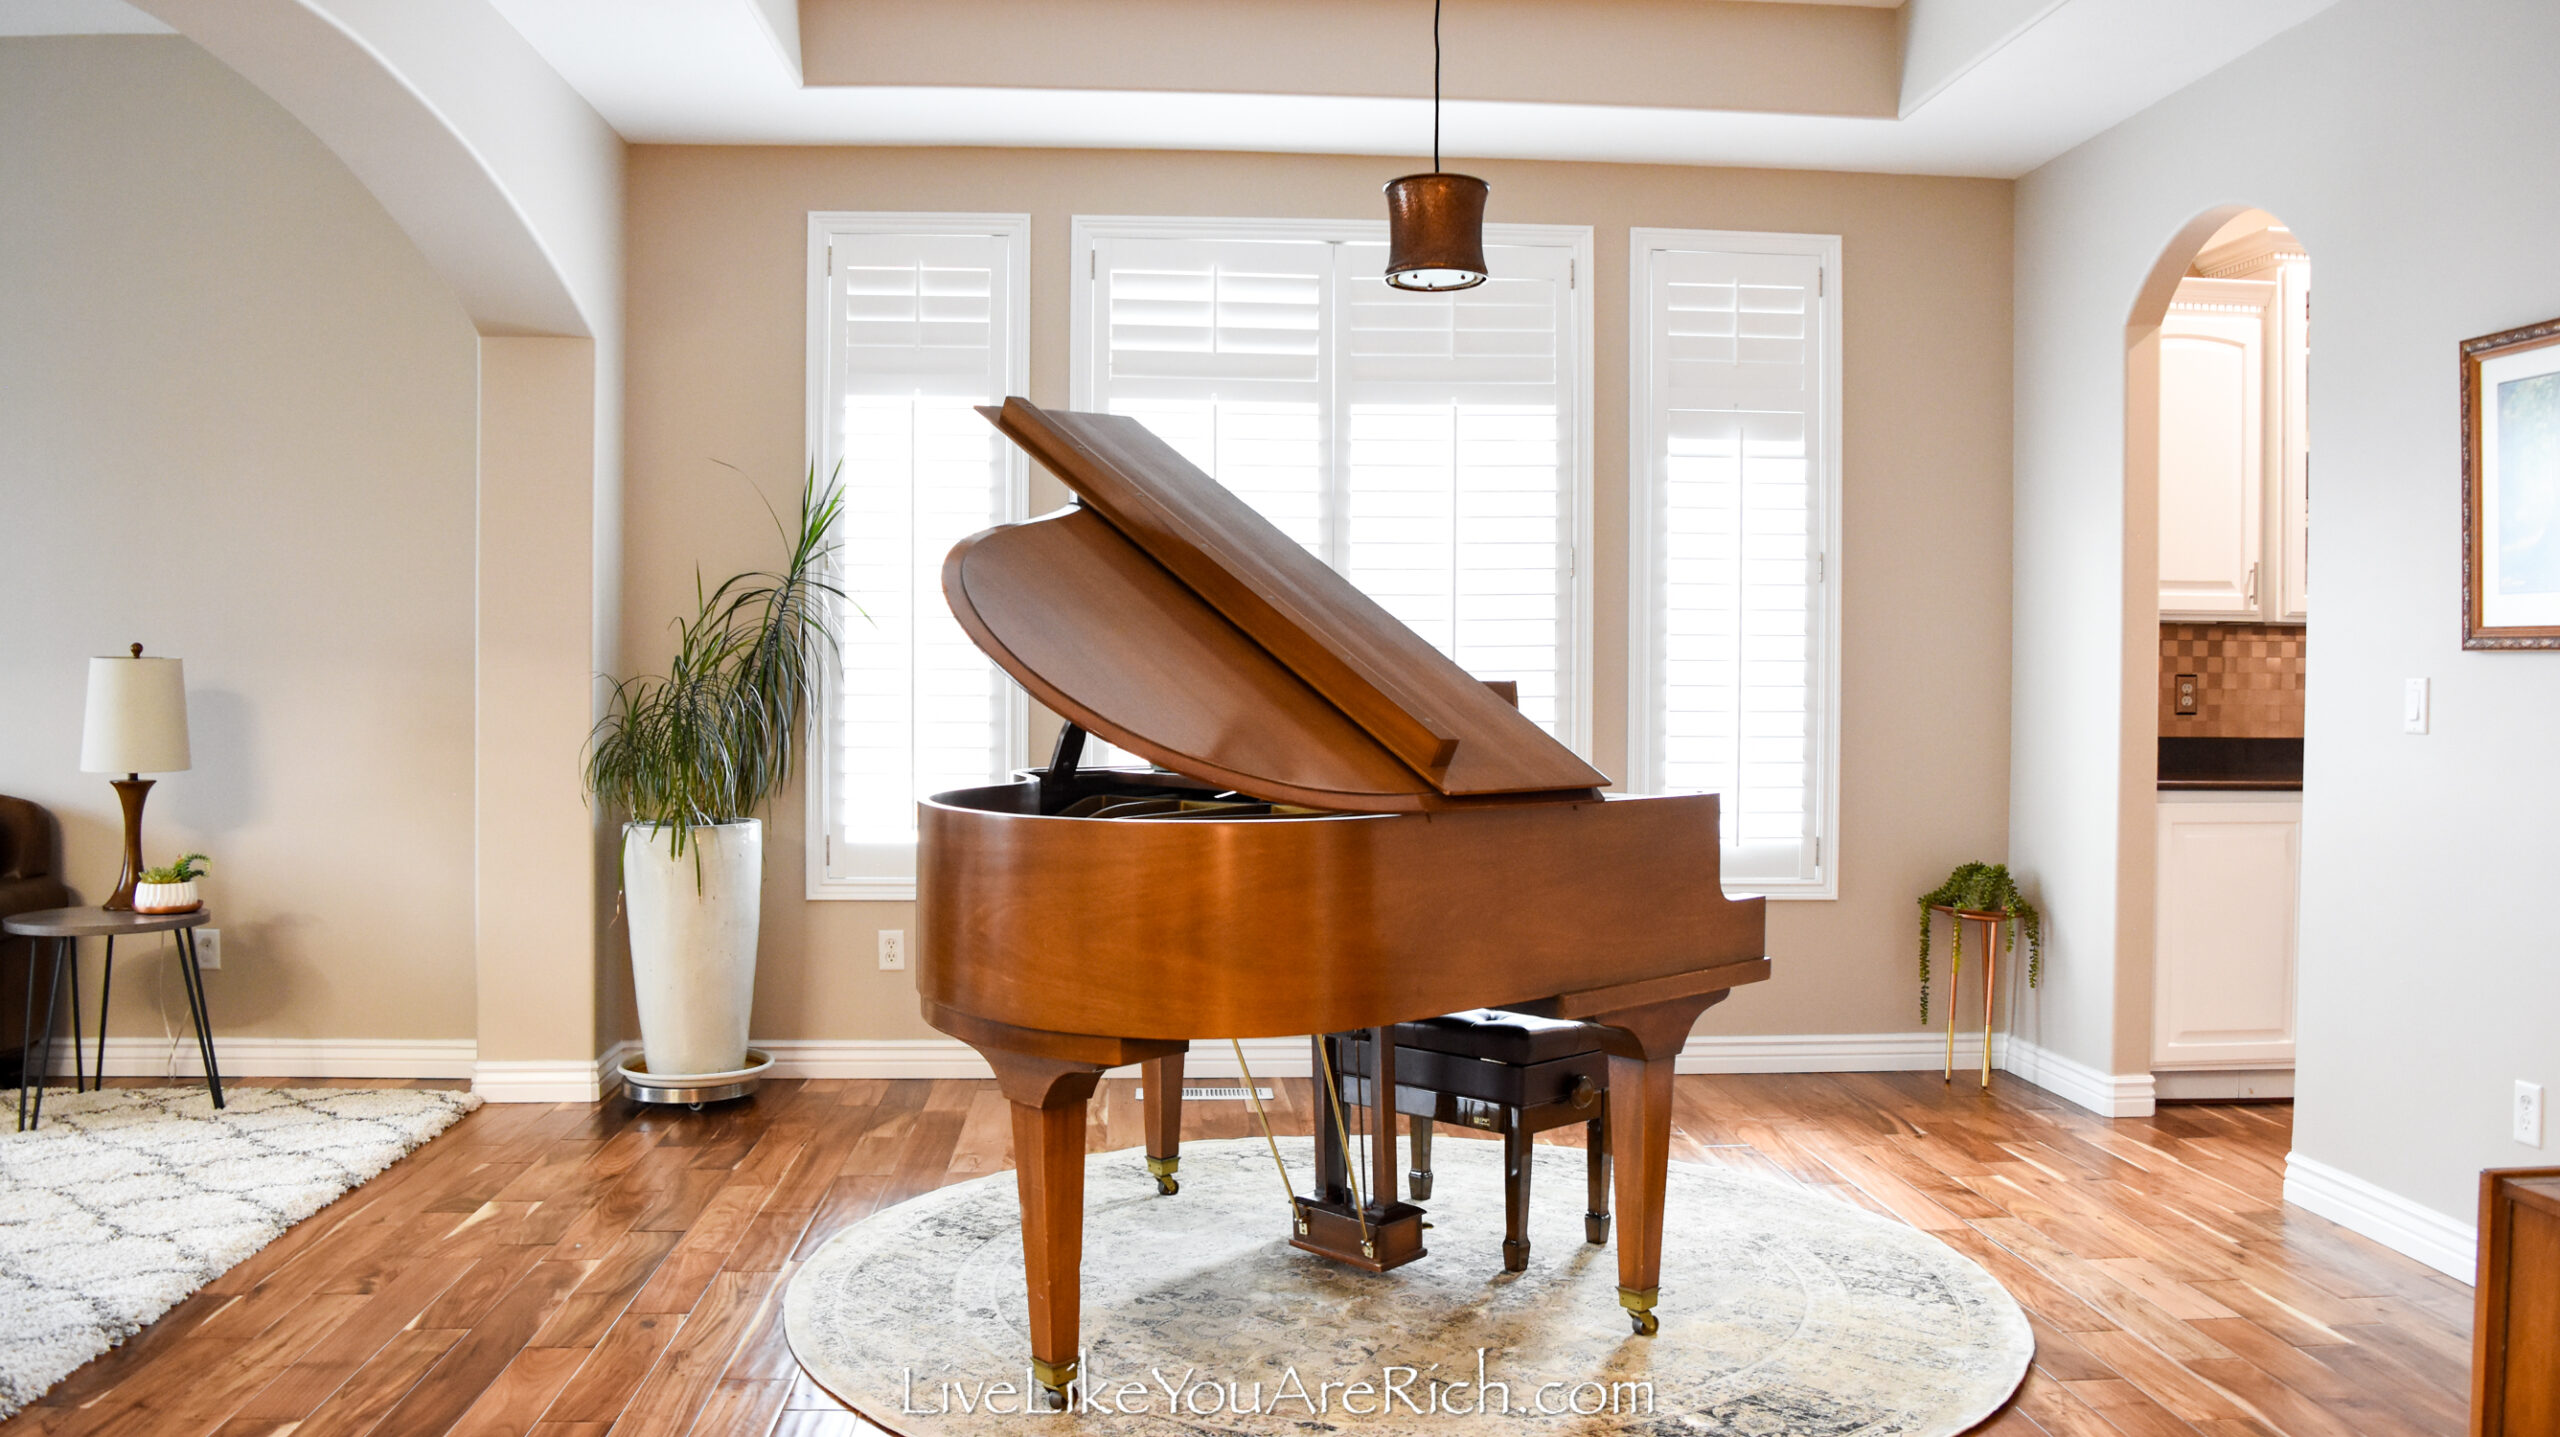 Piano Room Renovation Makeover - Home 3